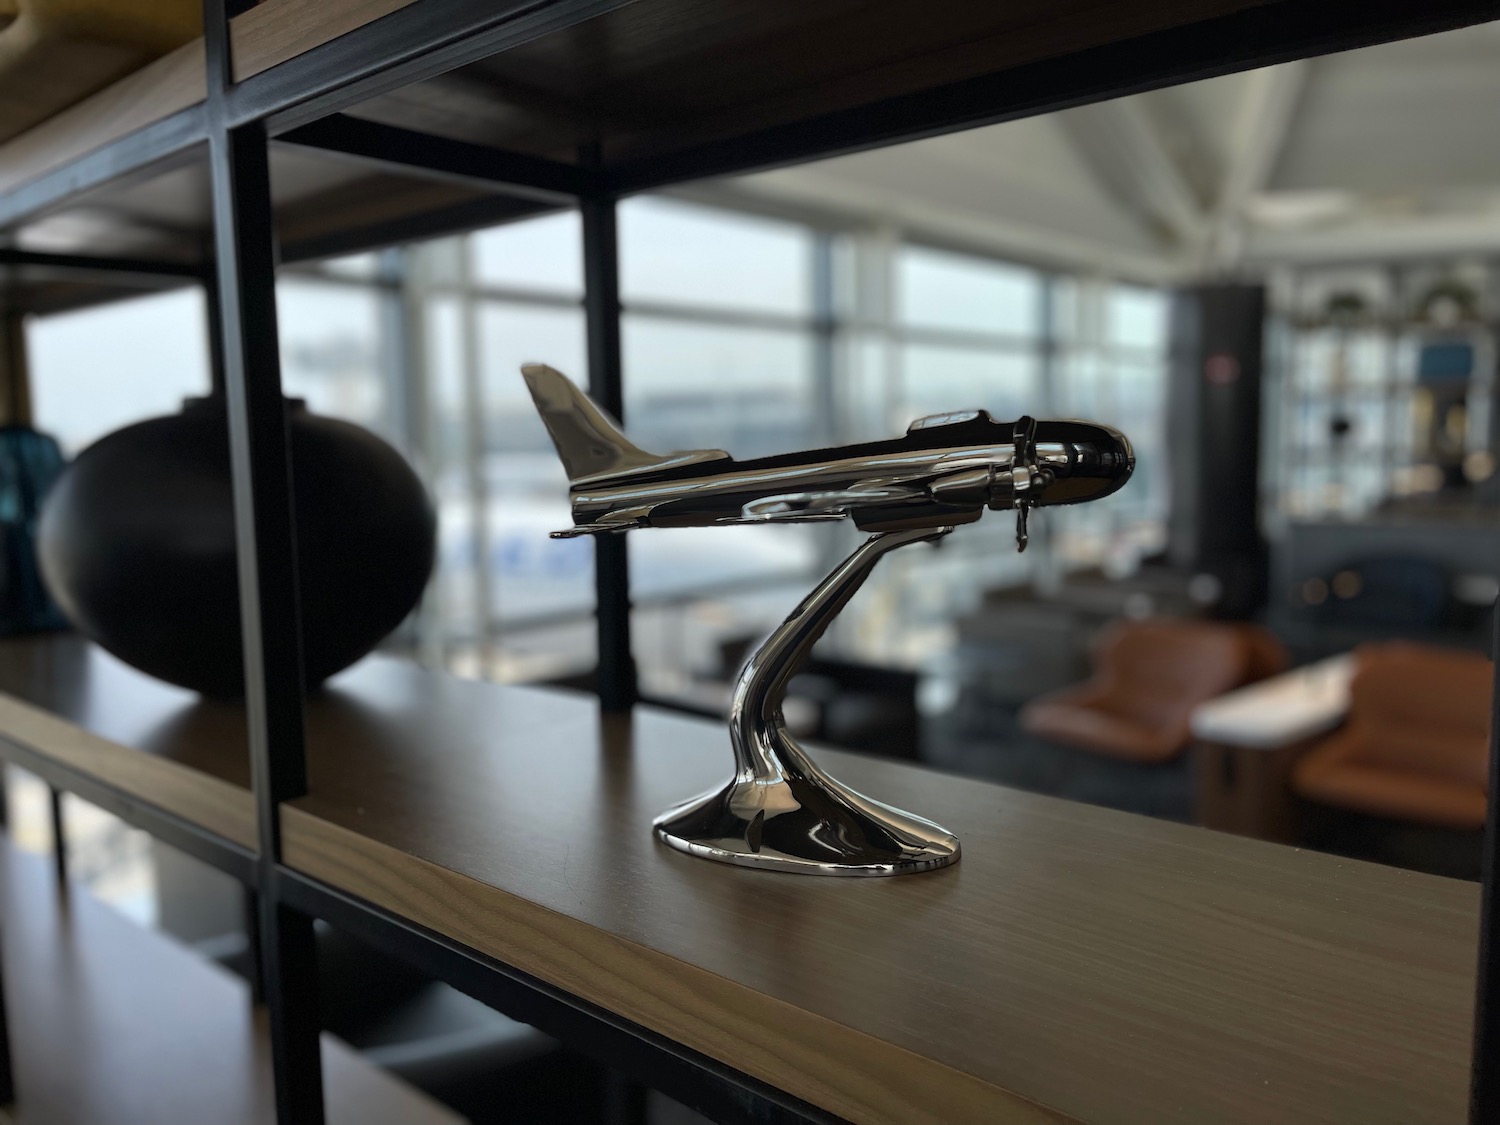 a model airplane on a shelf